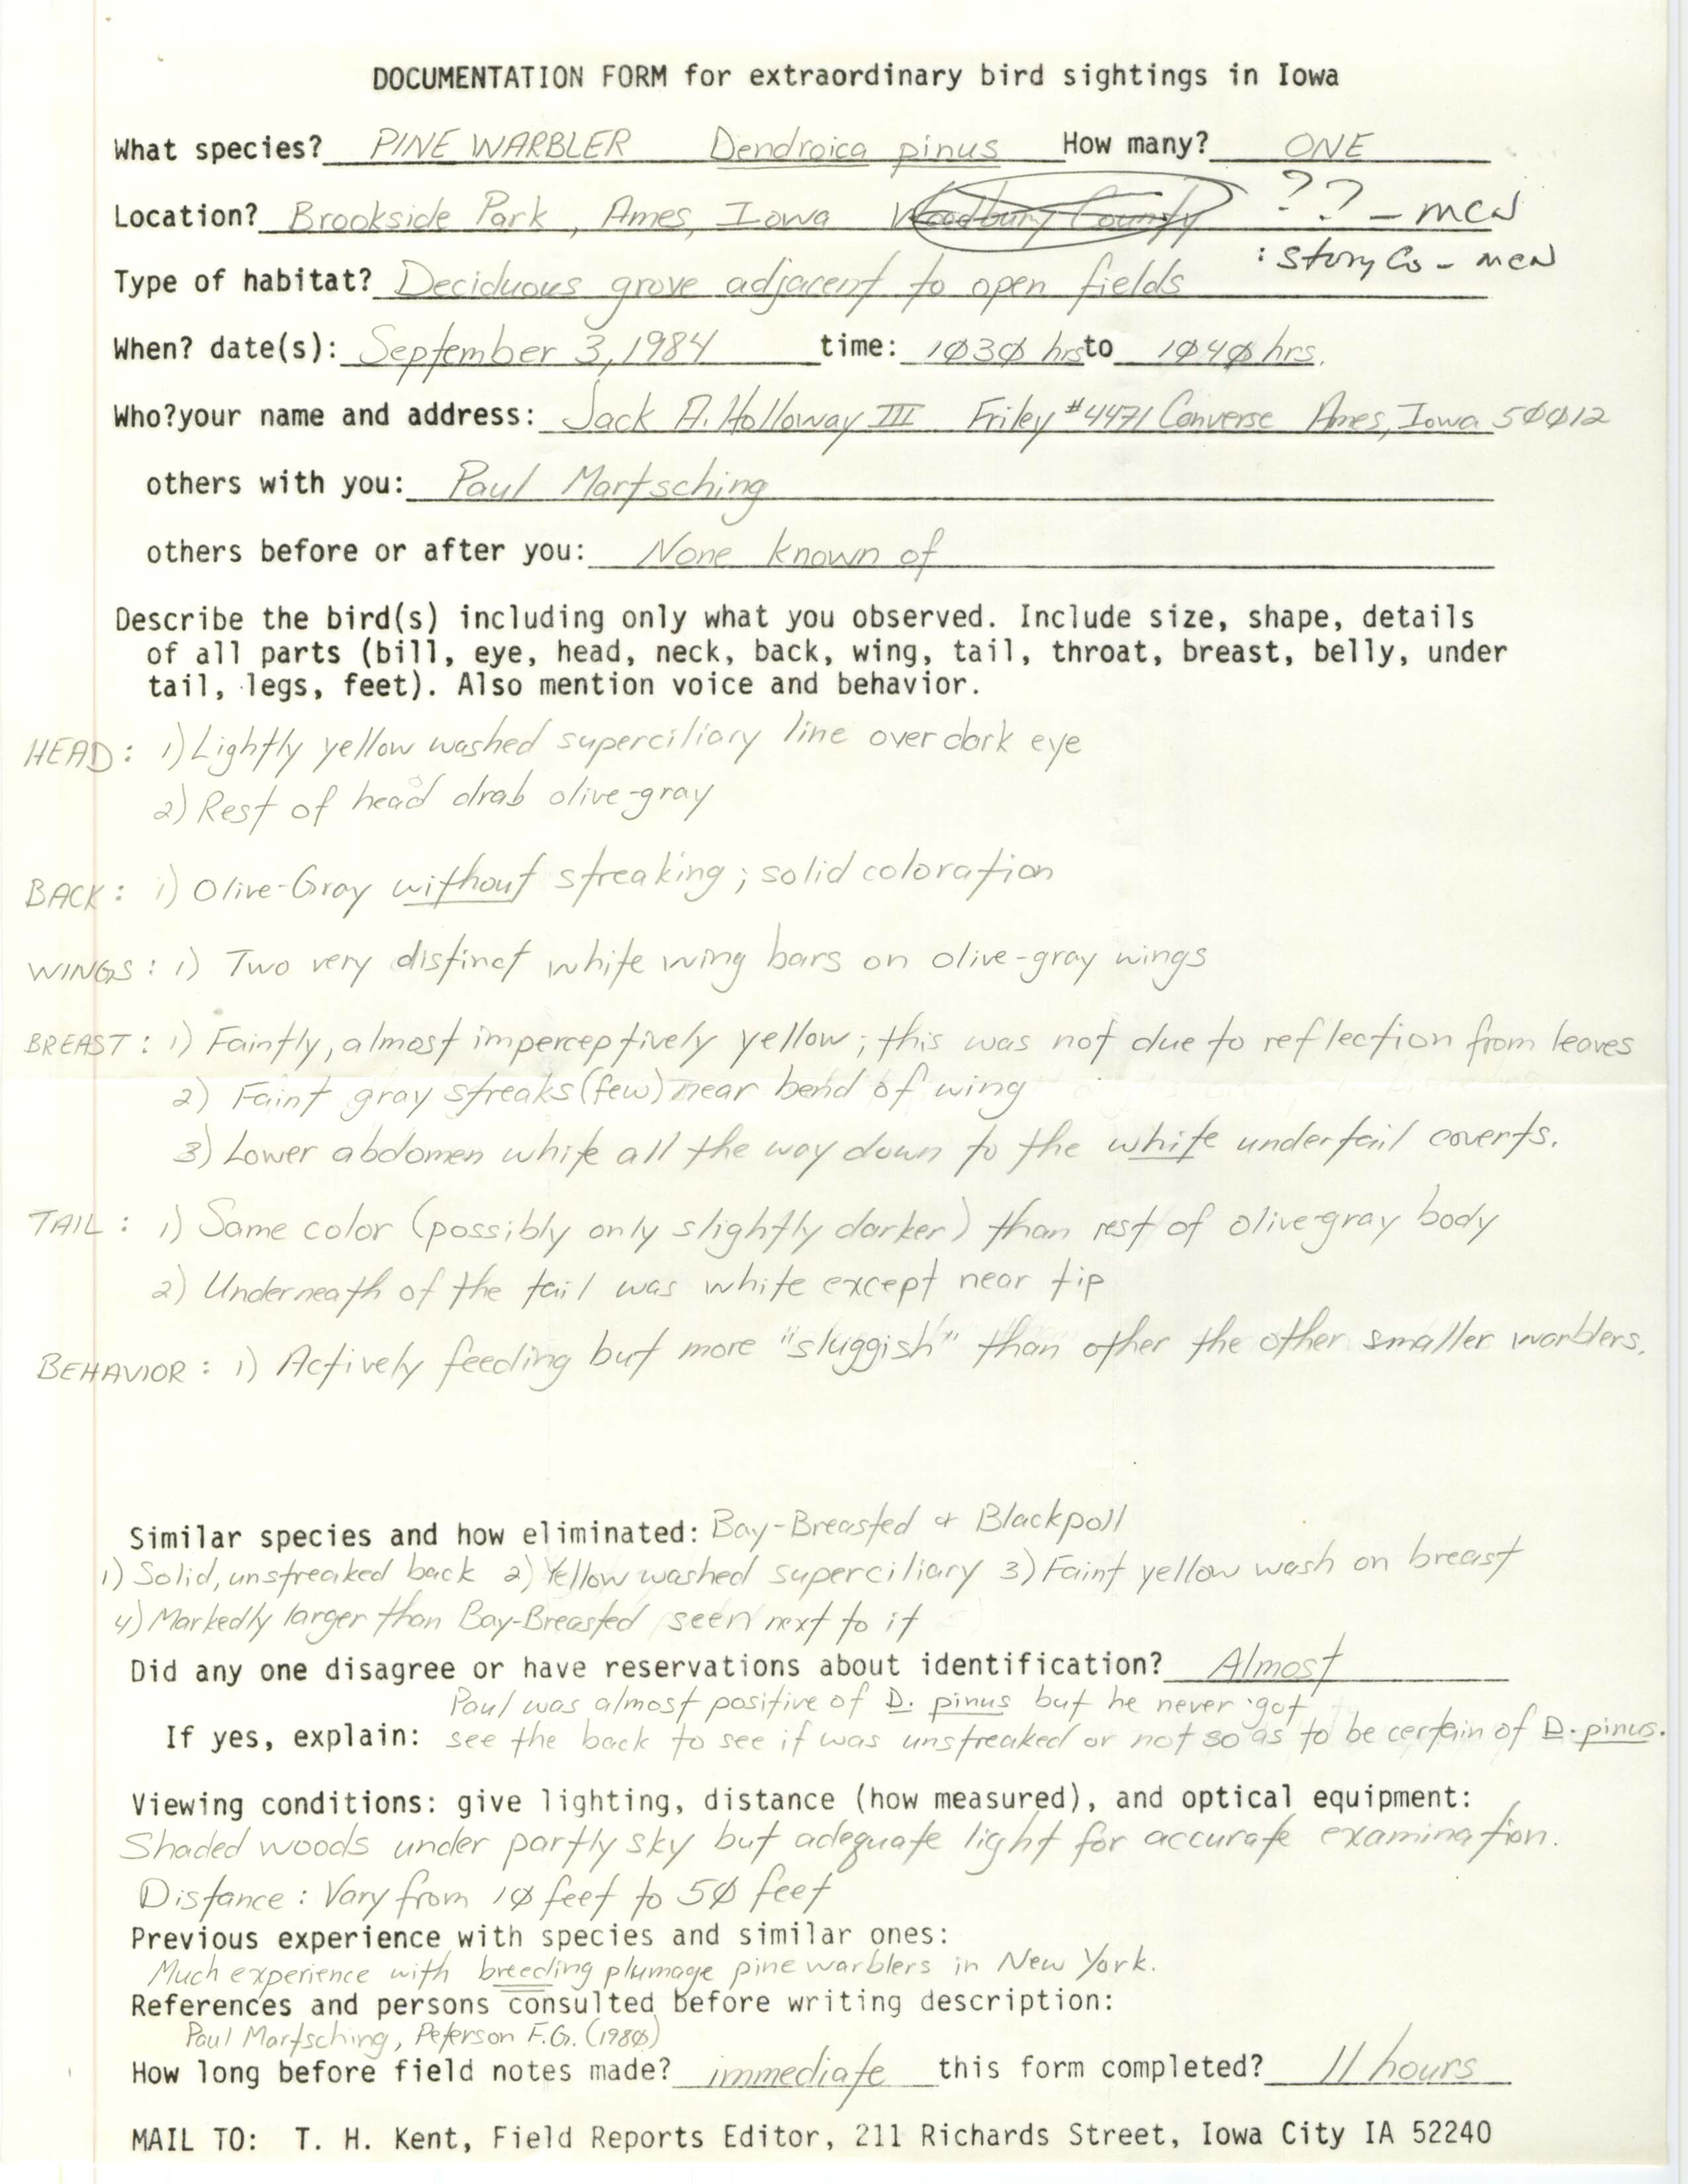 Rare bird documentation form for Pine Warbler at Brookside Park in Ames, 1984